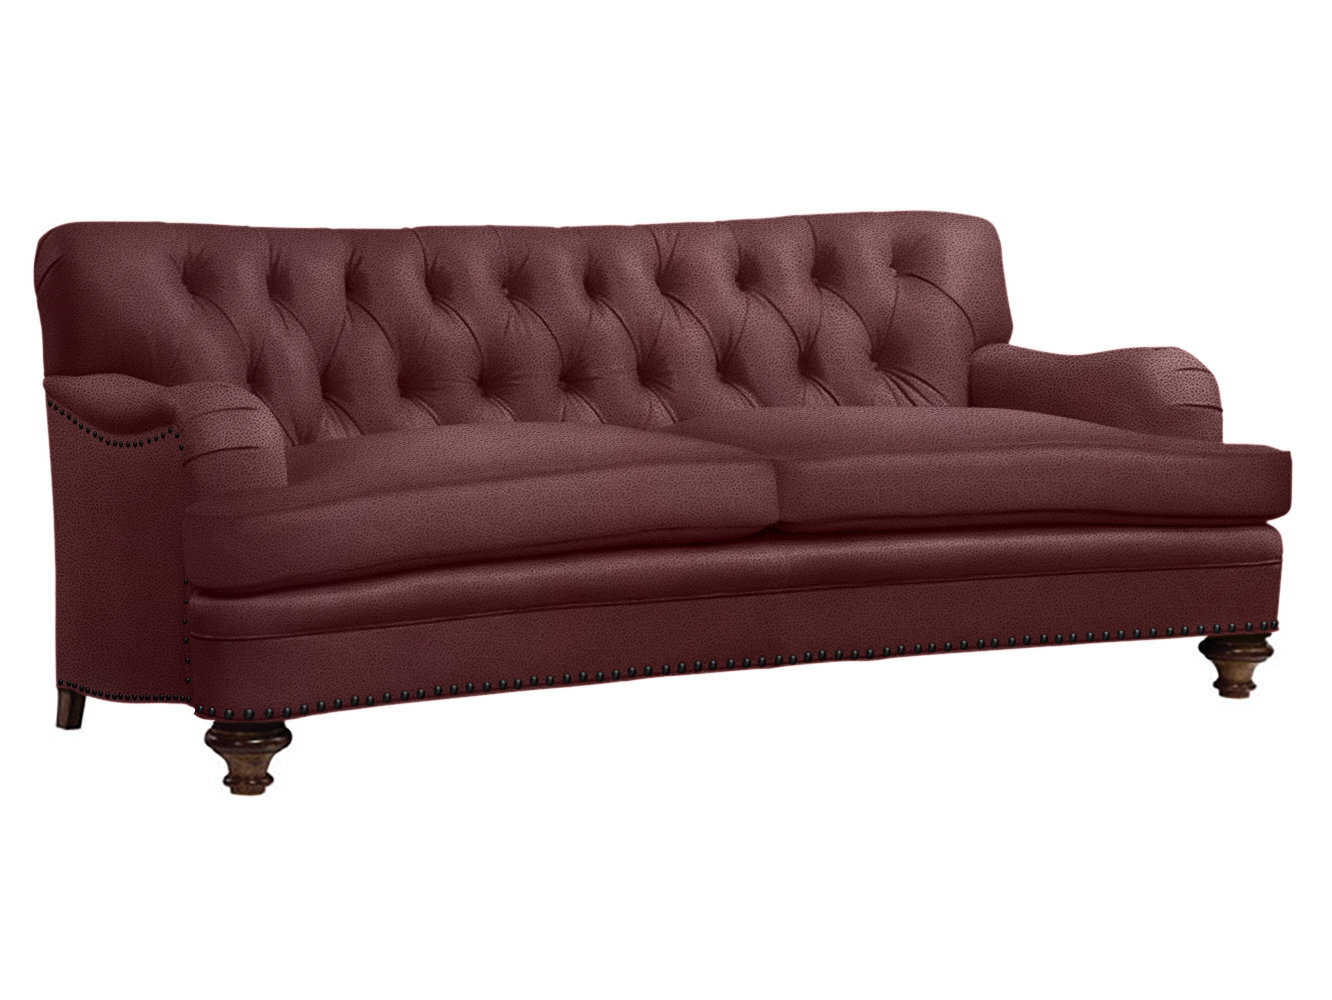 Genuine leather sofa in a tufted purple design